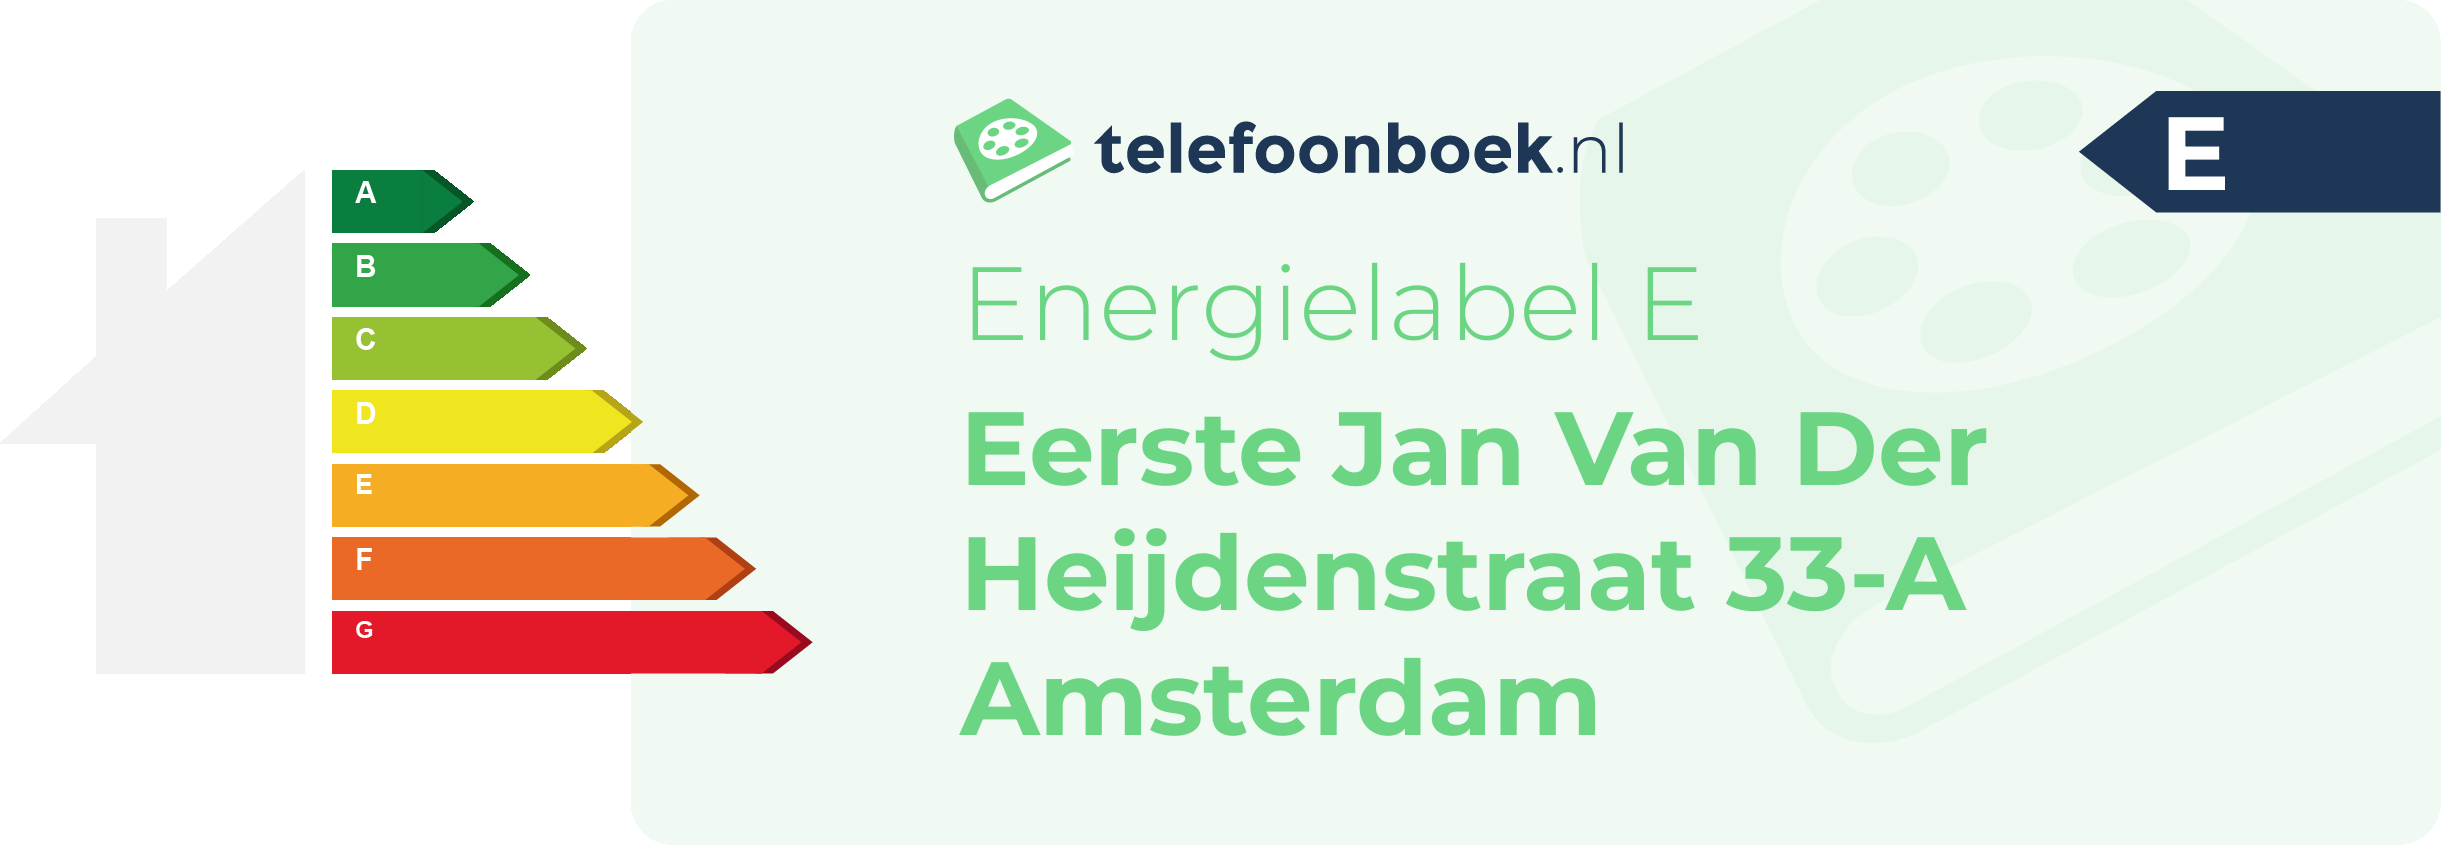 Energielabel Eerste Jan Van Der Heijdenstraat 33-A Amsterdam